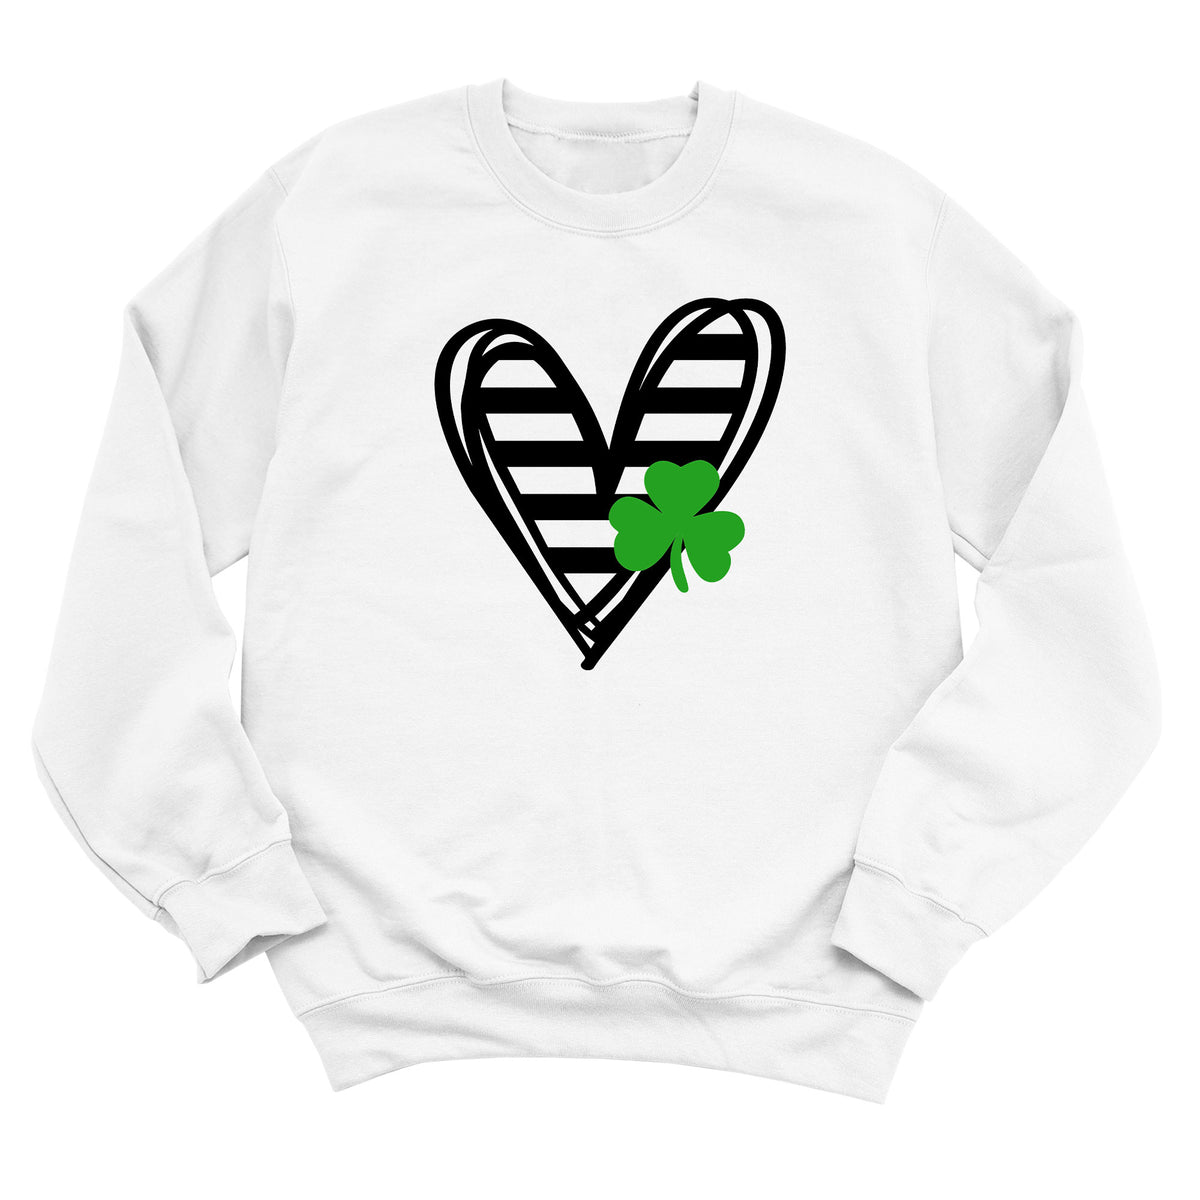 Striped Heart with Shamrock Sweatshirt